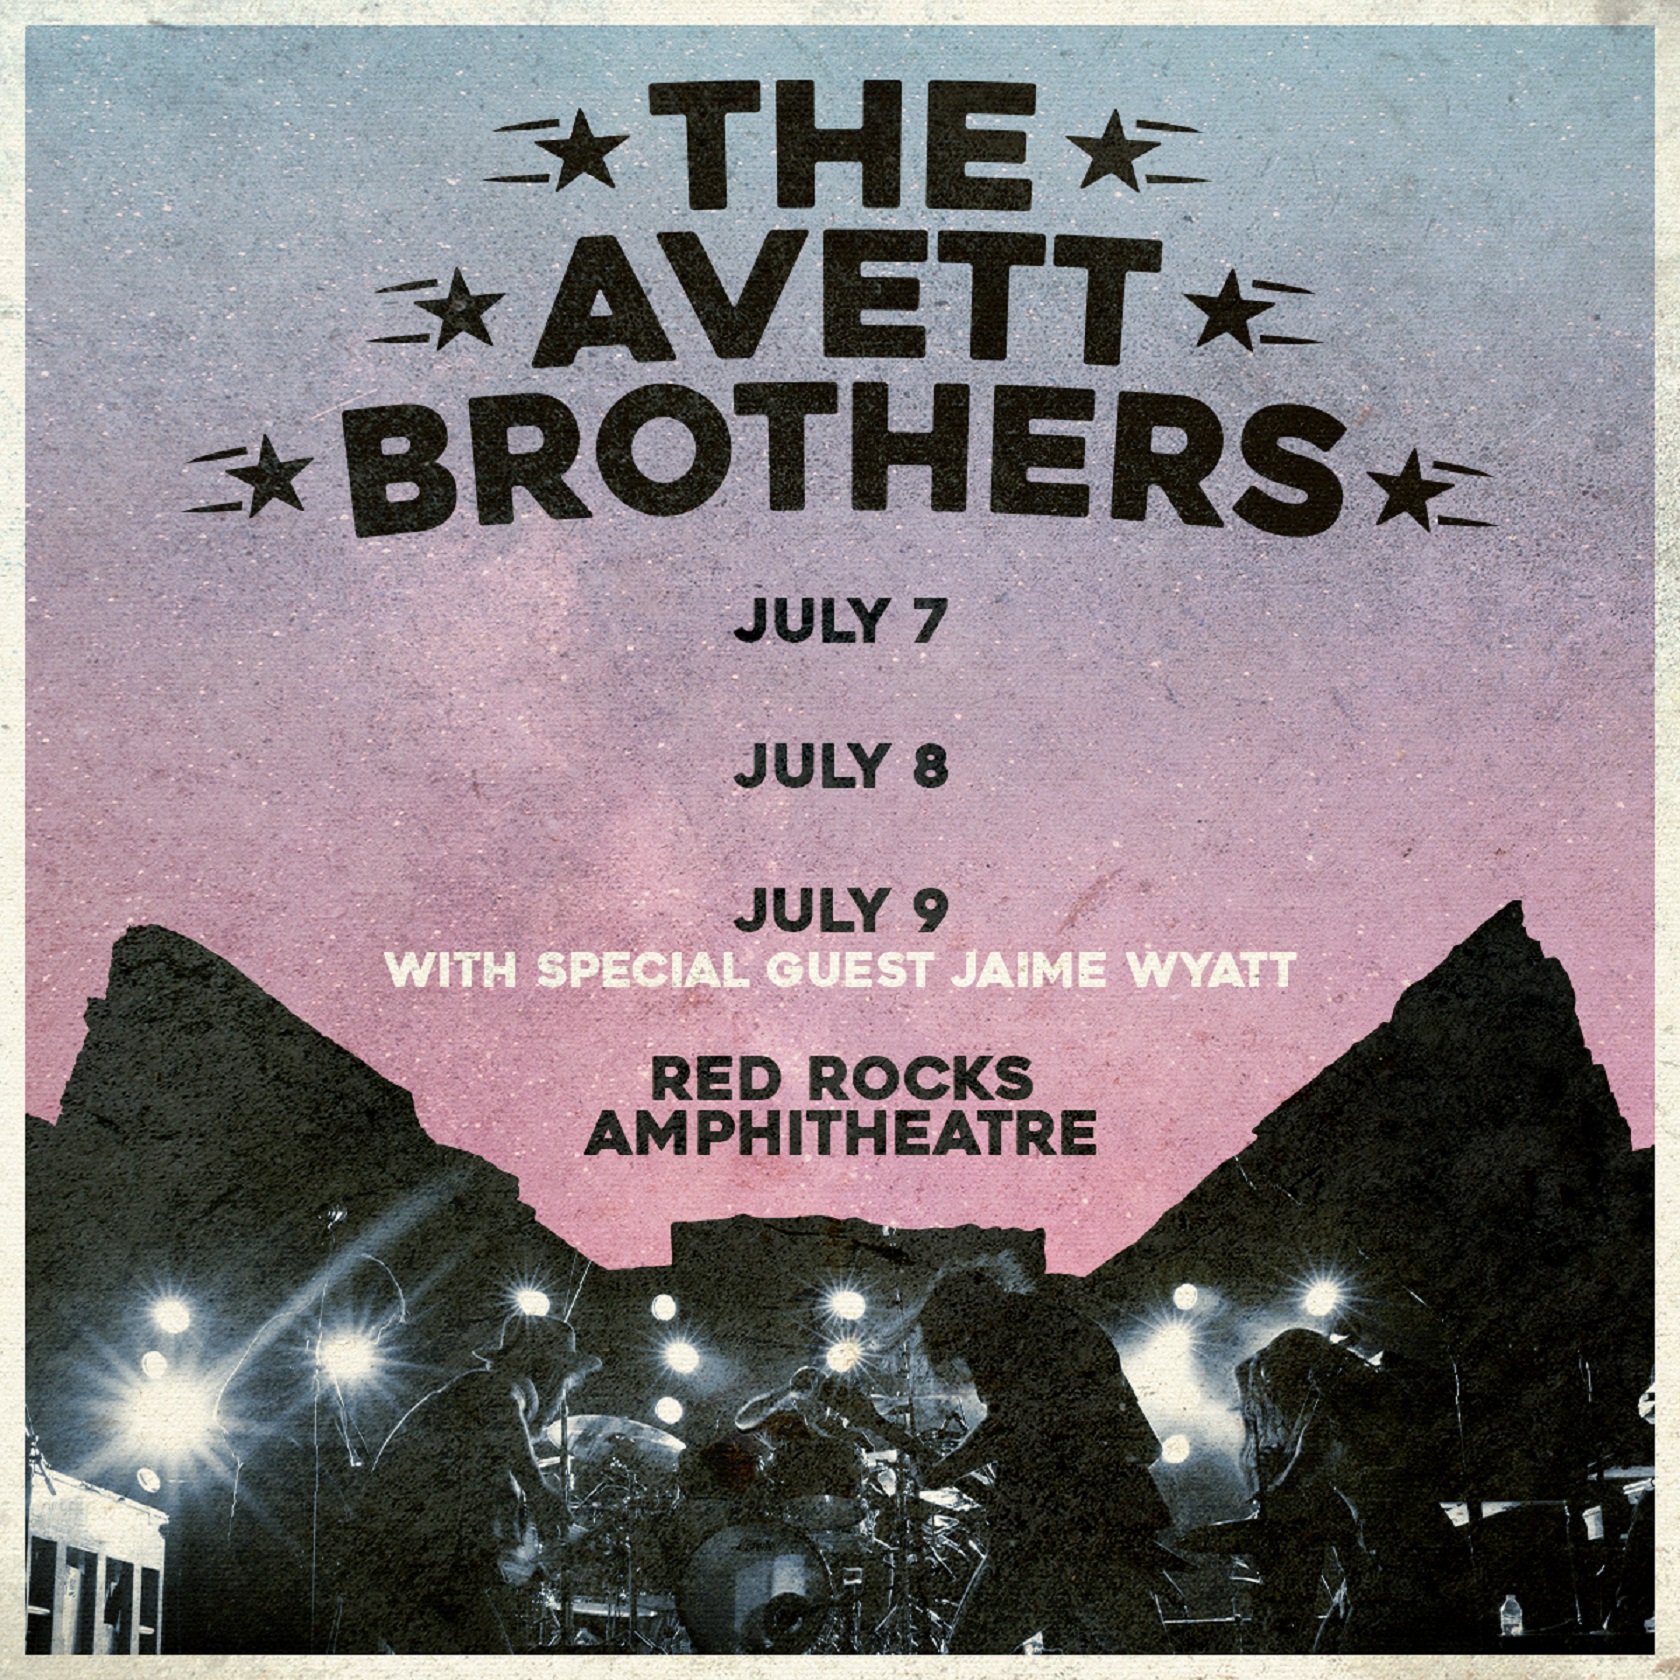 THE AVETT BROTHERS - Red Rocks Amphitheatre - Fri, July 7, Sat, July 8, Sun, July 9, 2023